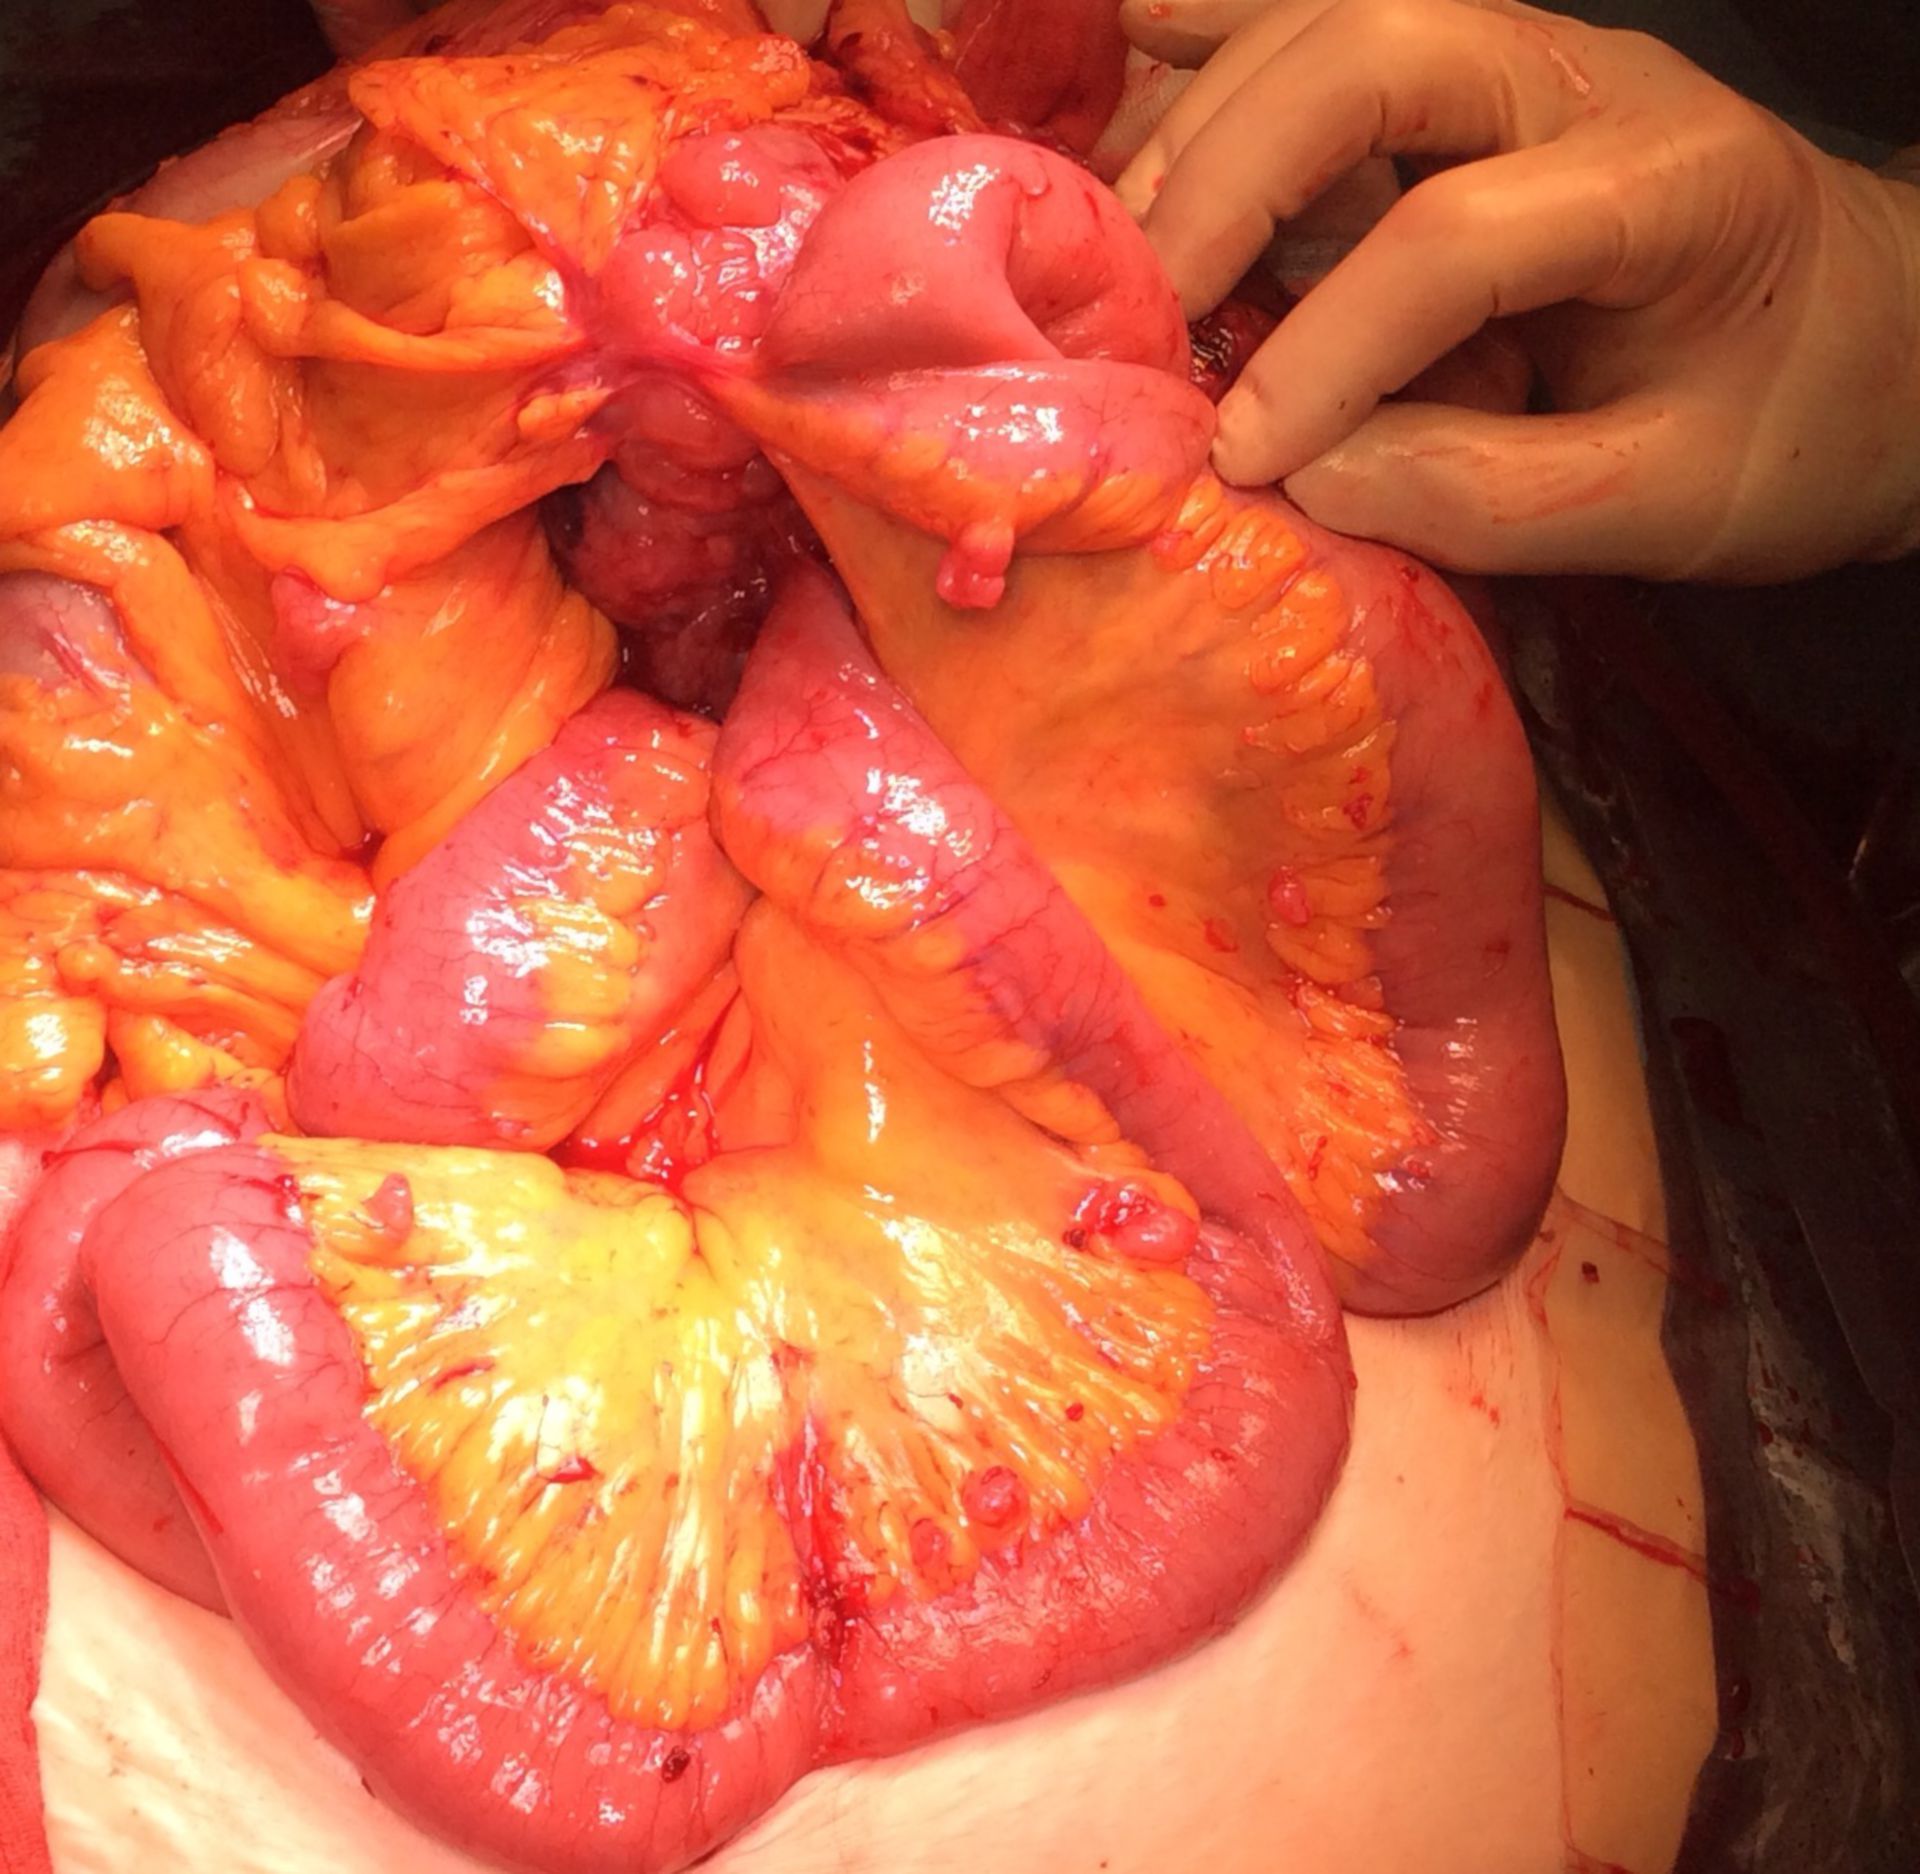 Tumor of the small intestine GIST